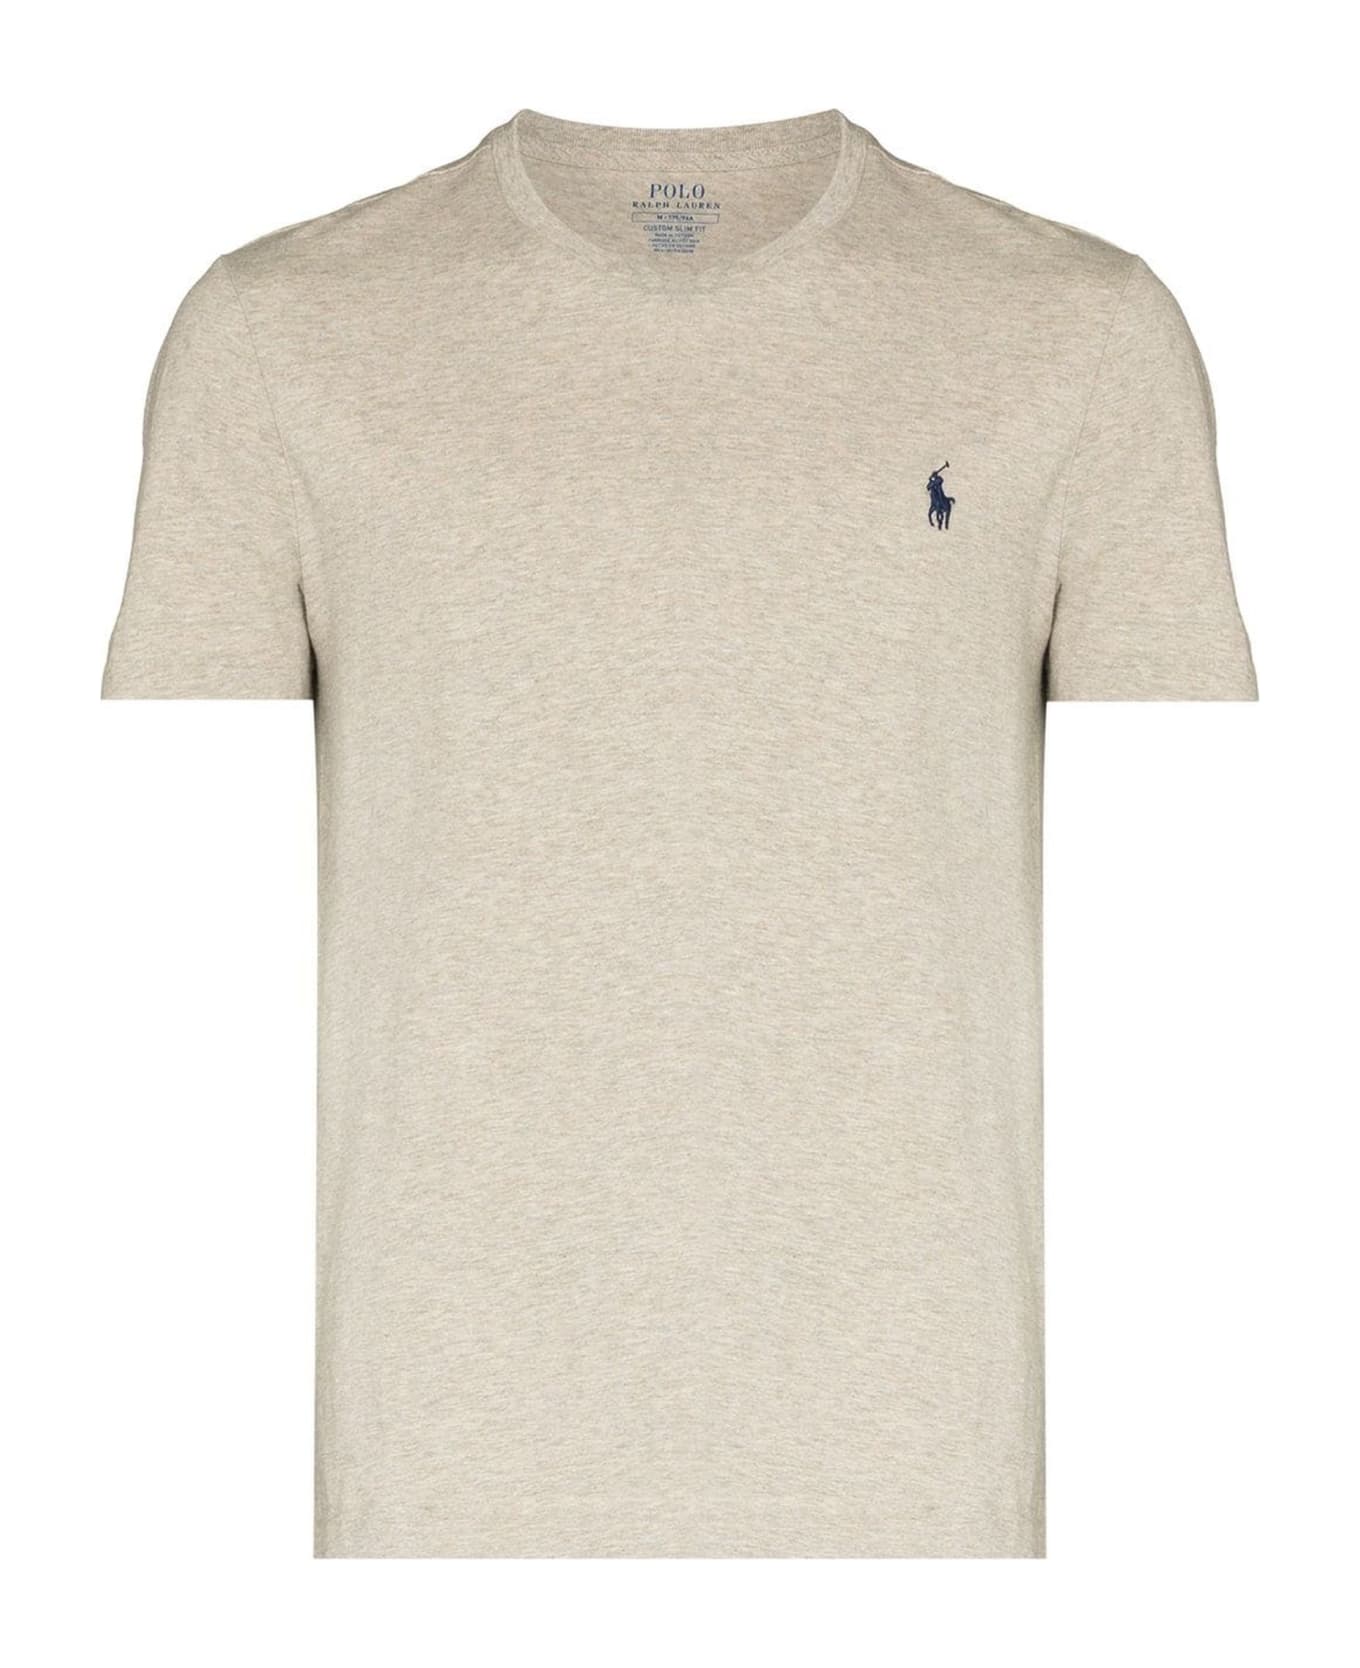 Ralph Lauren Grey Cotton T-shirt - New Grey Heather